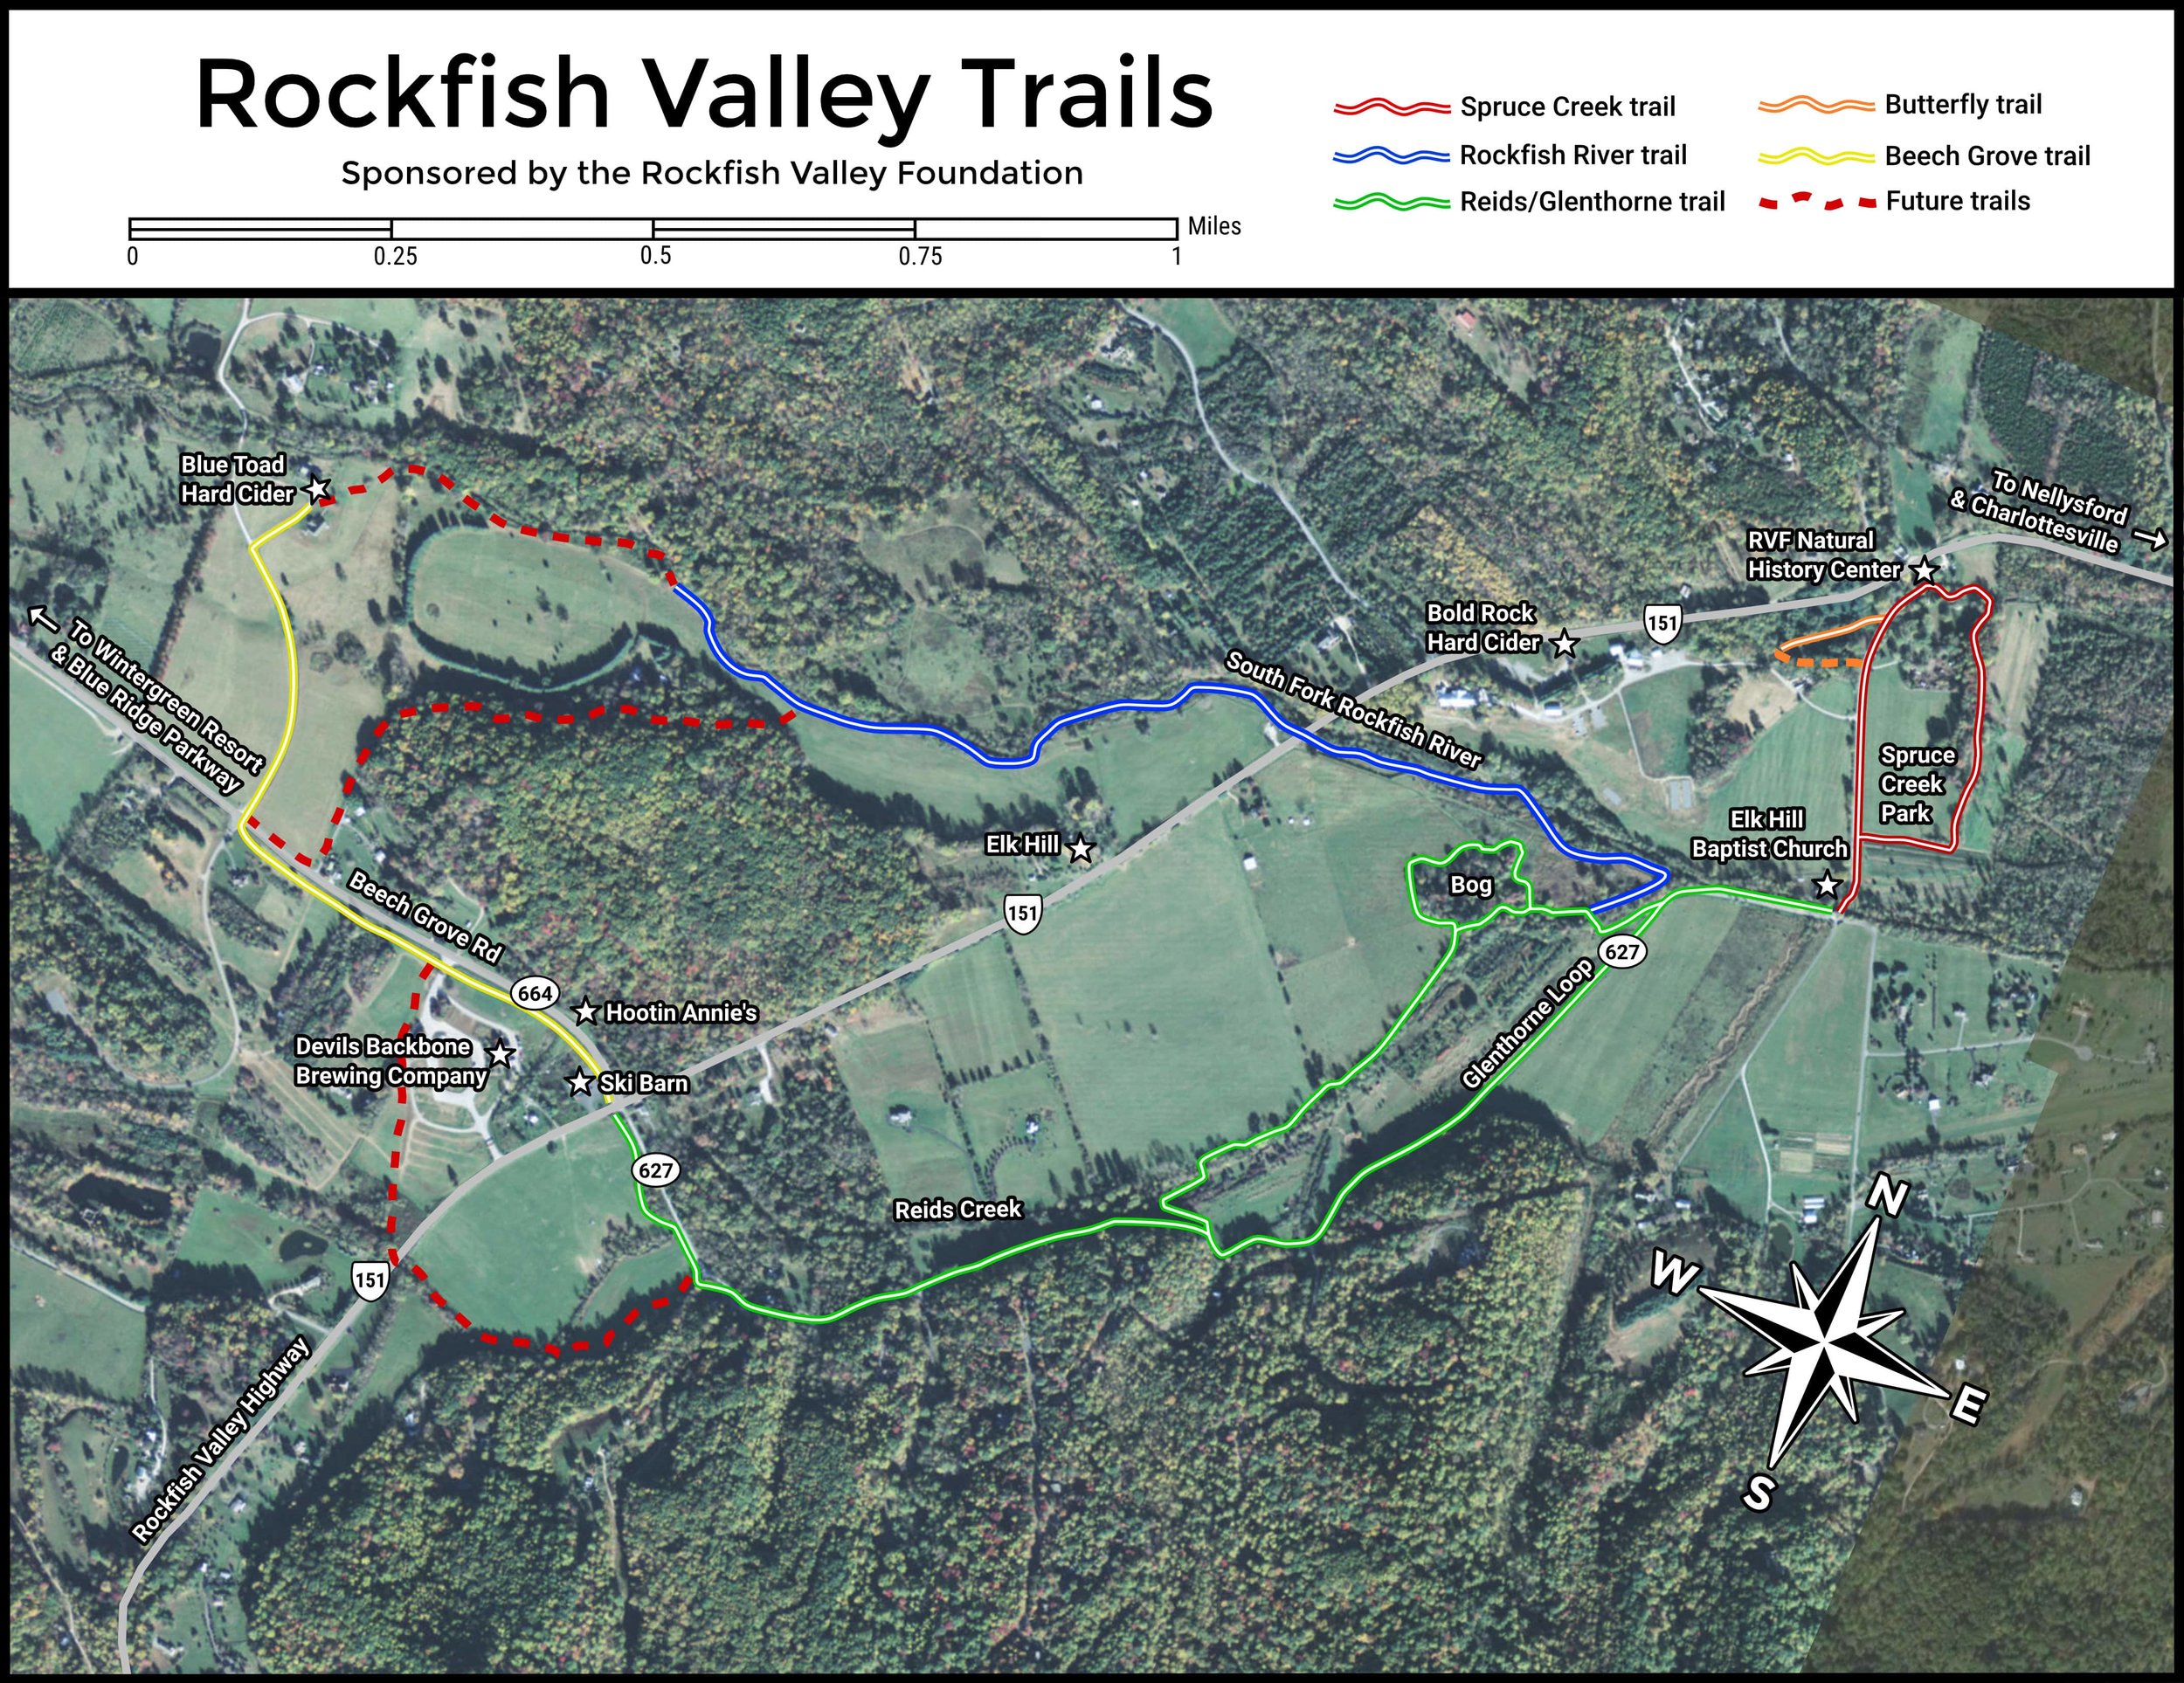 RVF-Trails-Map@2x.jpg